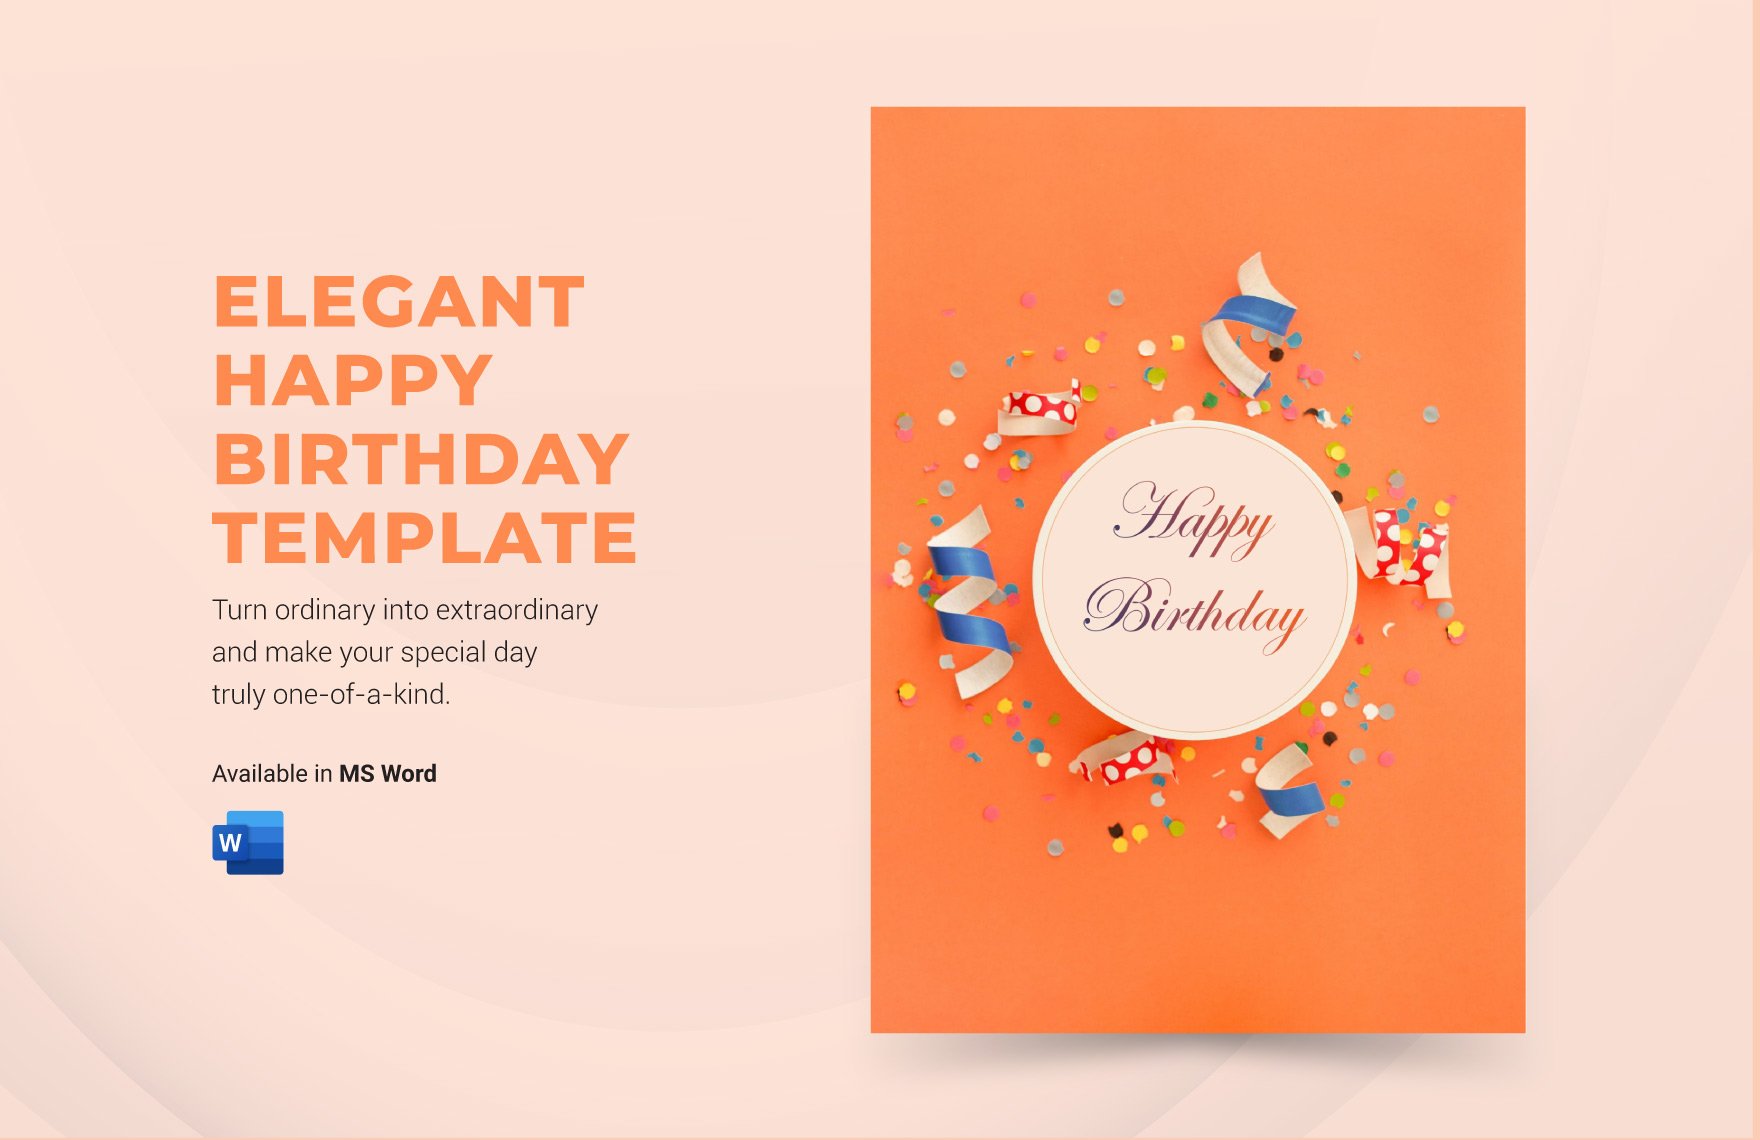 Free Elegant Happy Birthday Template in Word